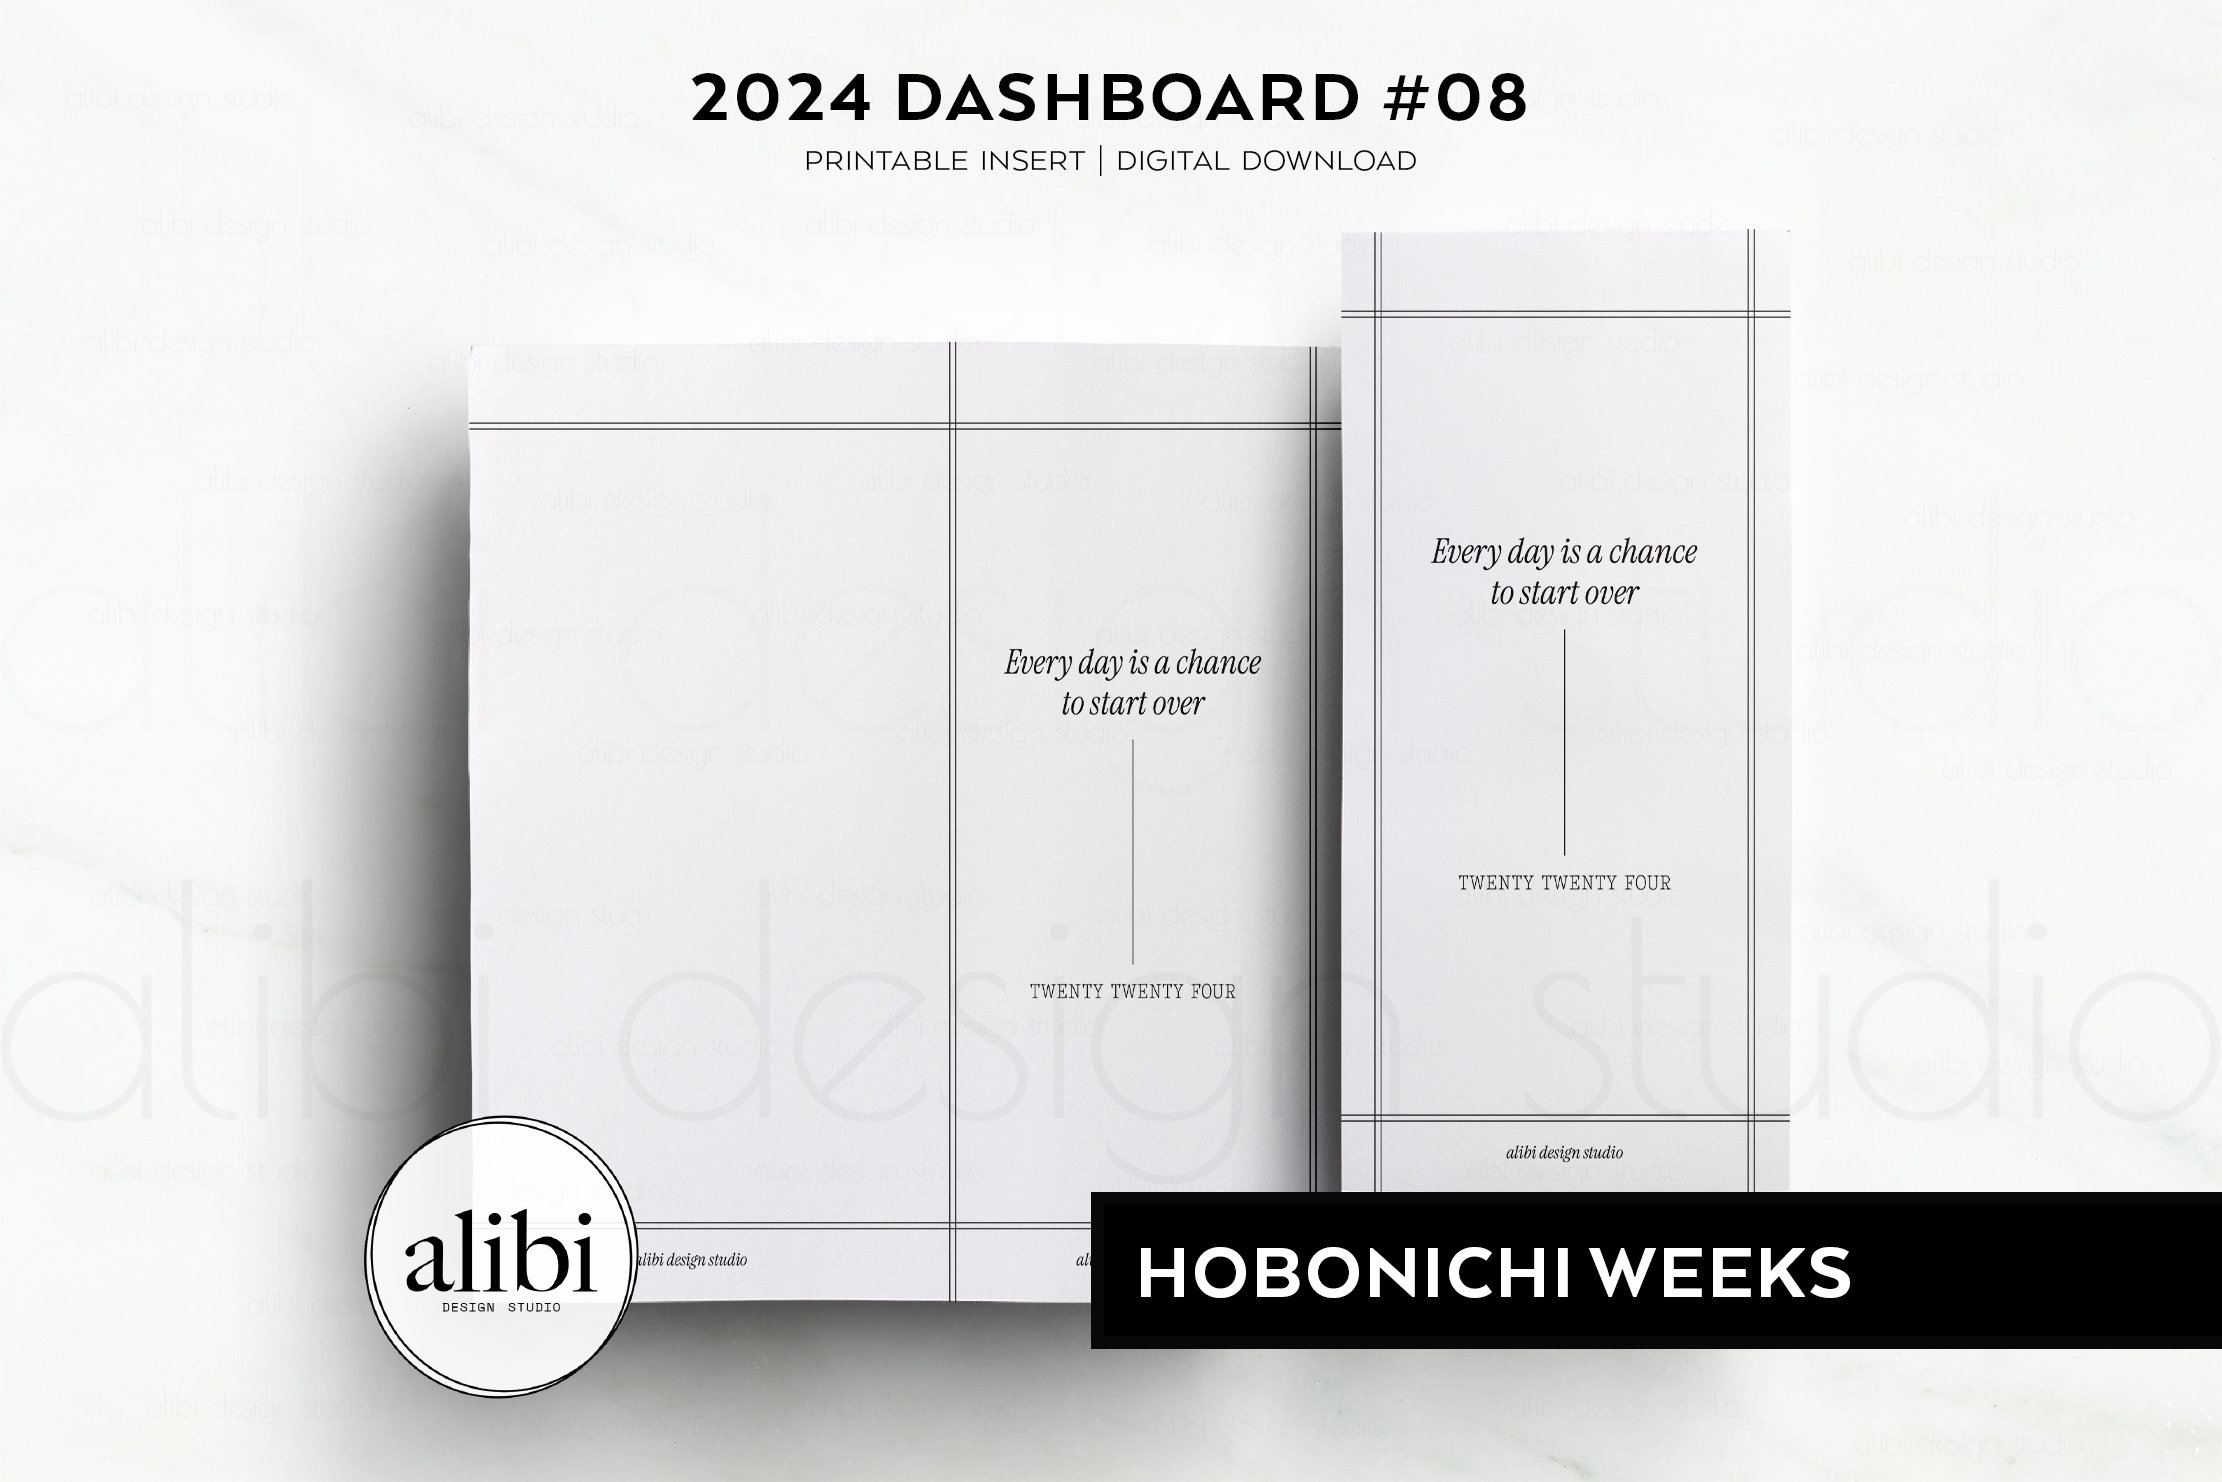 Hobonichi Weekly Calendar 2024 - Accessories Lineup - Accessories -  Hobonichi Techo 2024